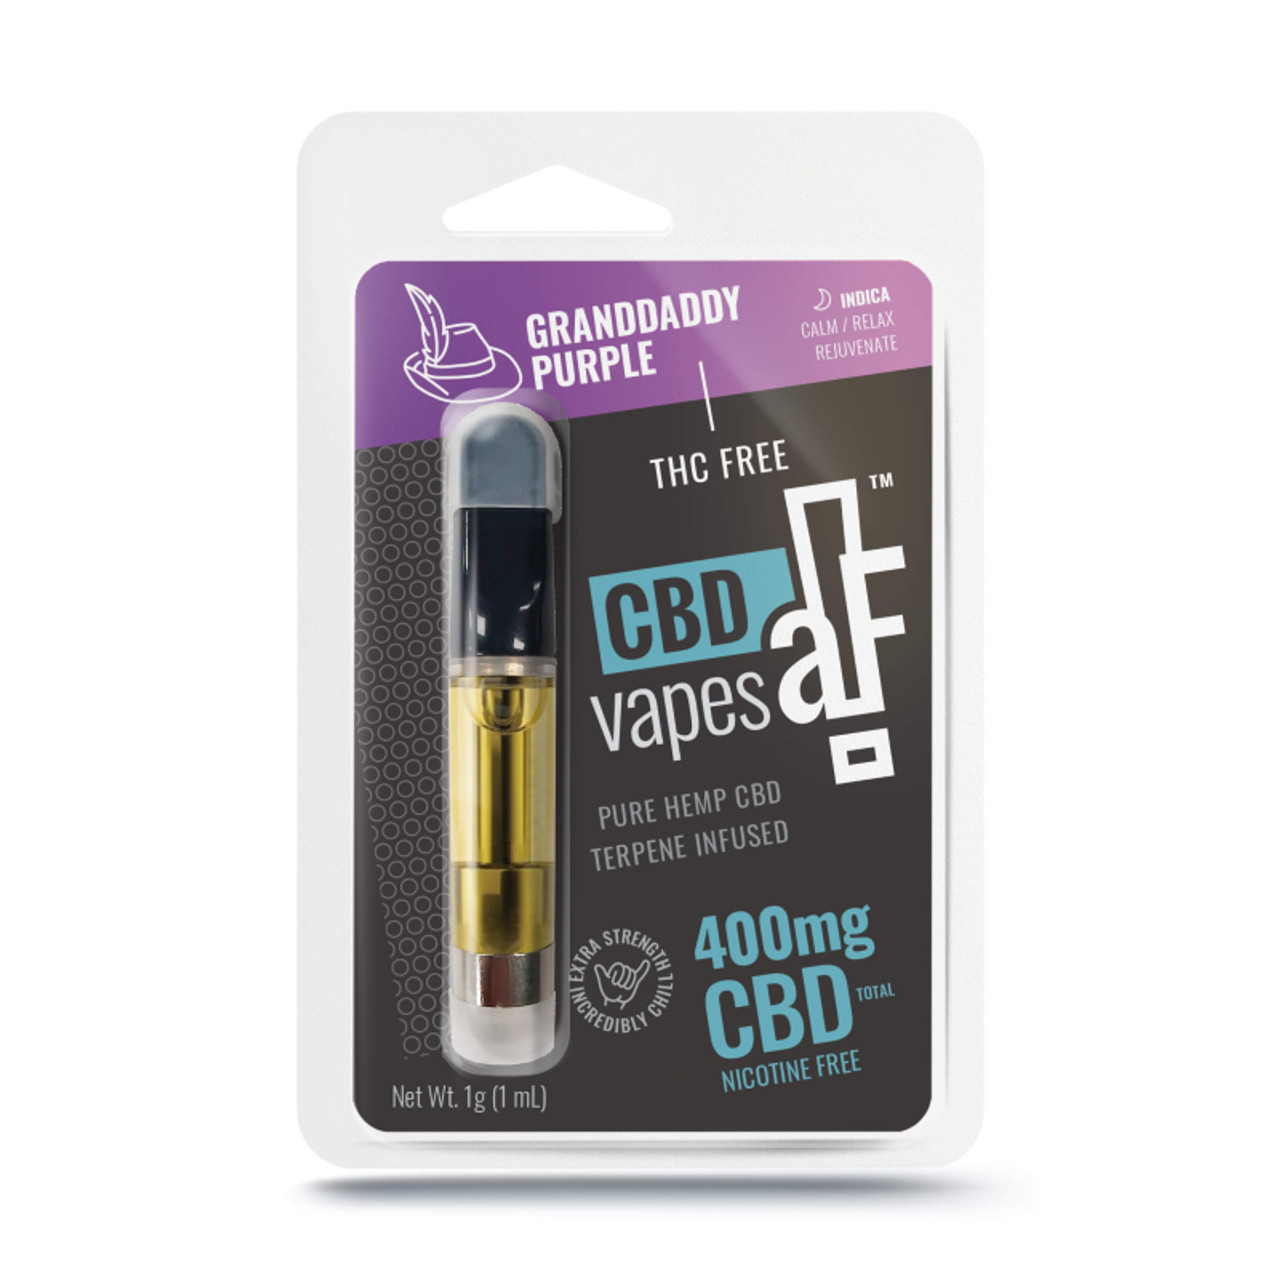 CBDaF! CBD Vape Isolate Cartridge Granddaddy Purple 1g, 400mg